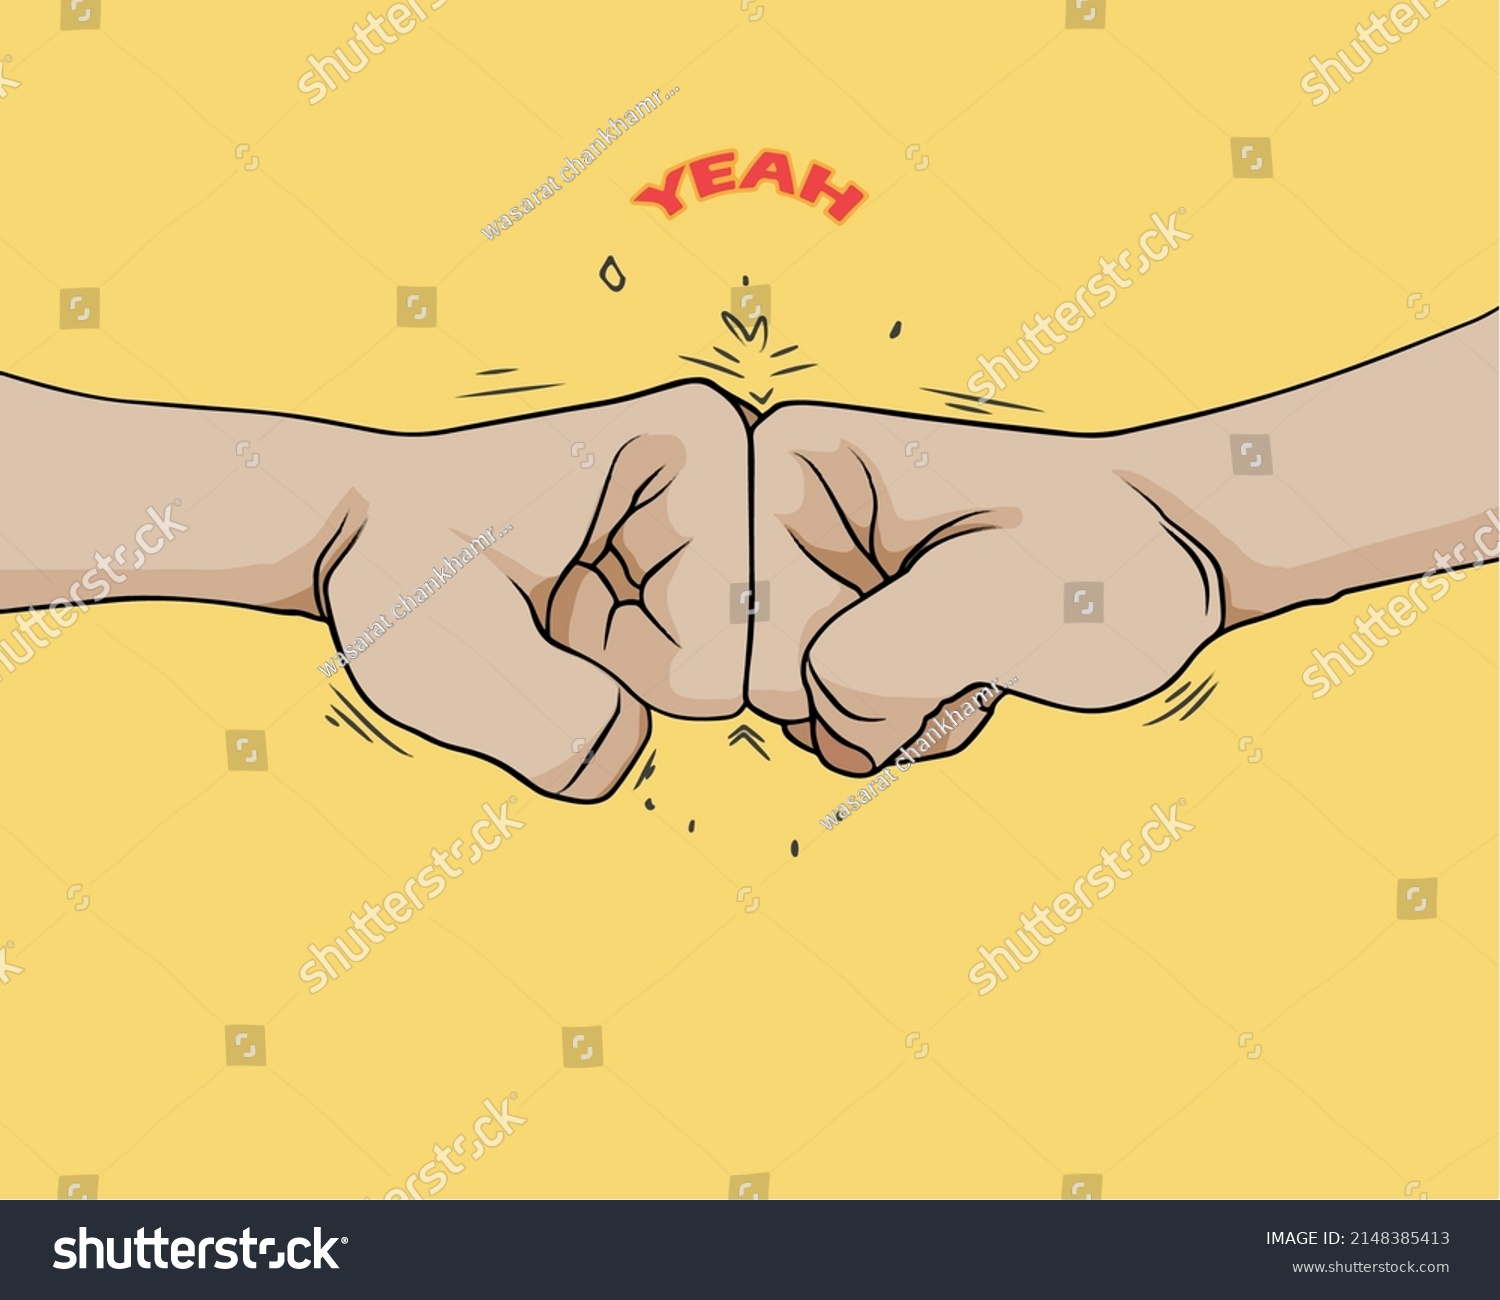 Fist Bump Gesture Similar Meaning Handshake Stock Vector Royalty Free 2148385413 Shutterstock 9535